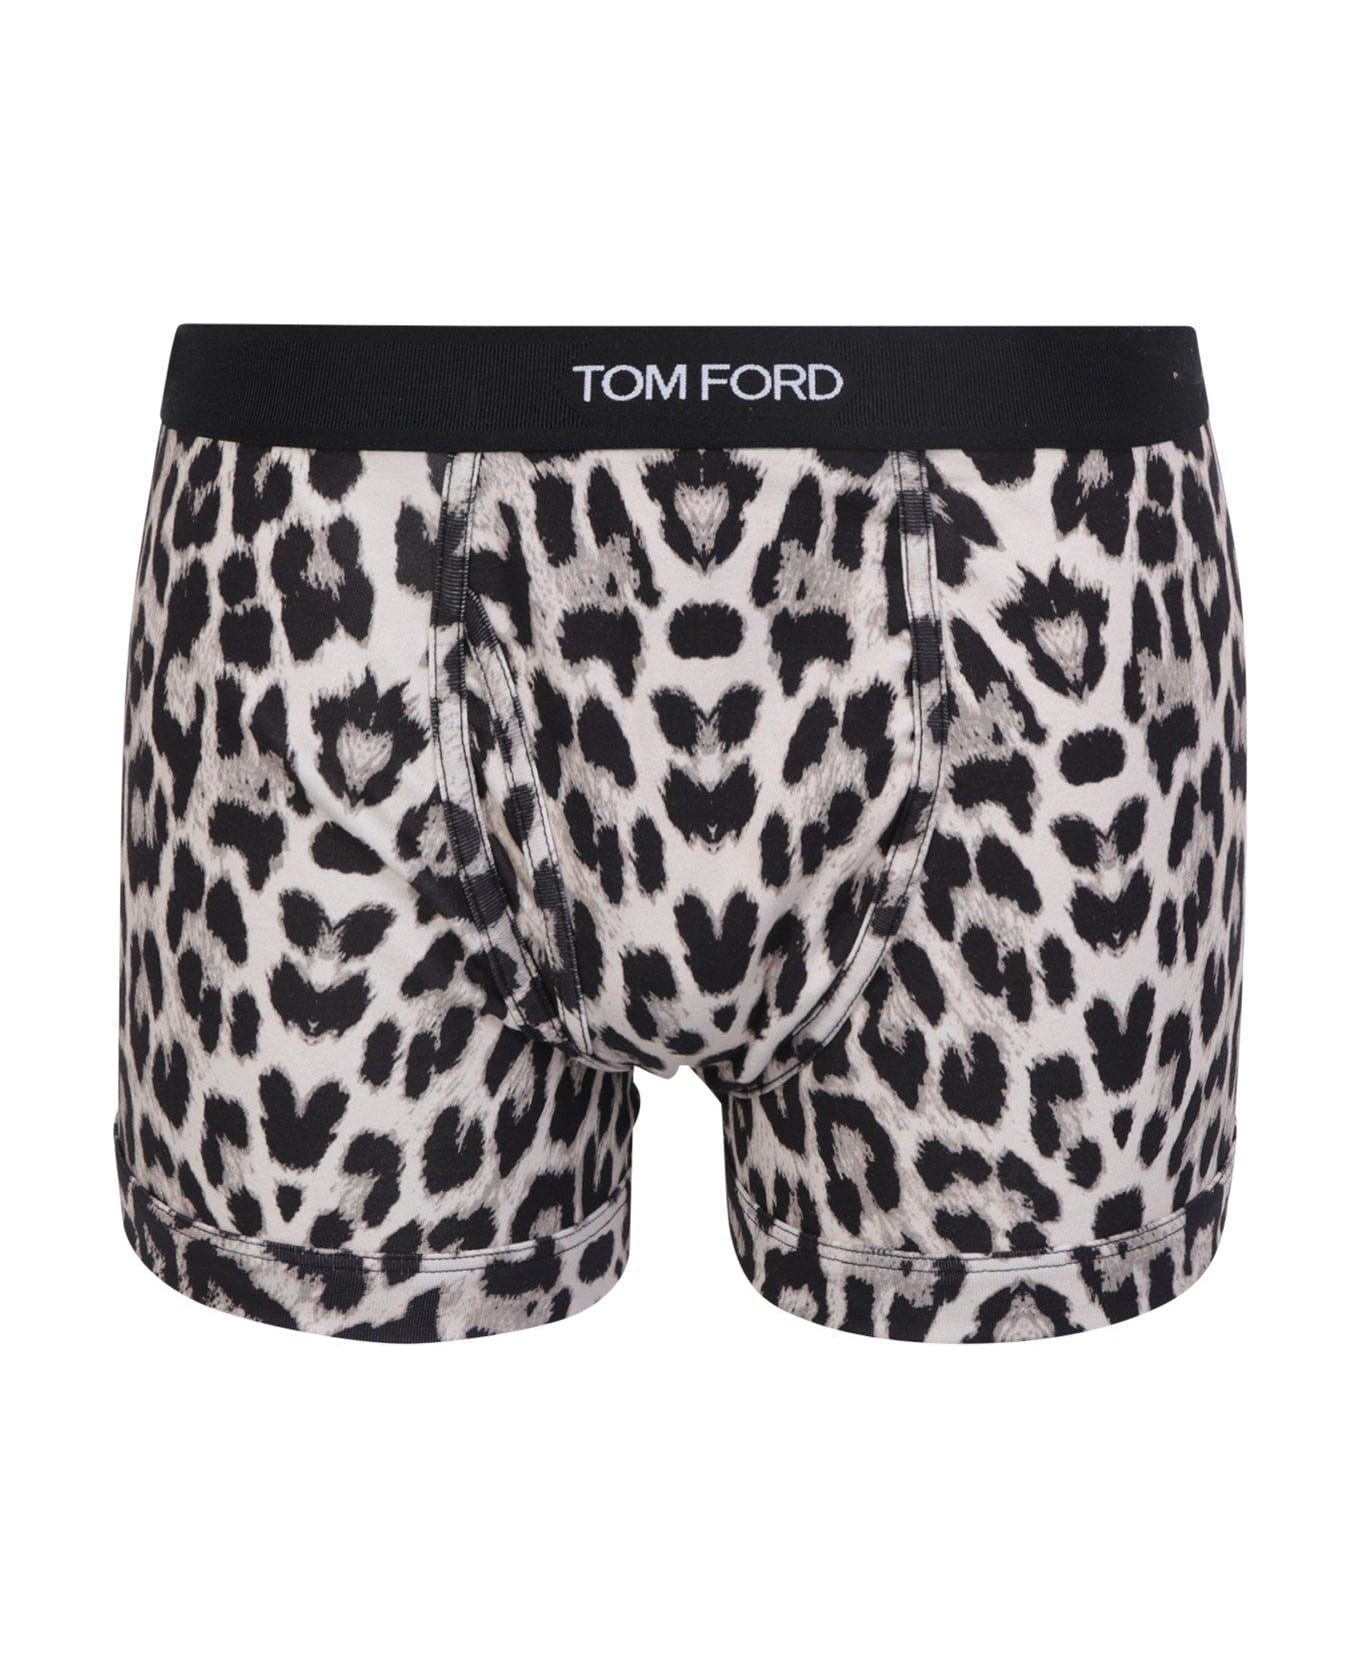 Tom Ford Animal Print Skinny Cut Boxers - NEUTRALS/BLACK